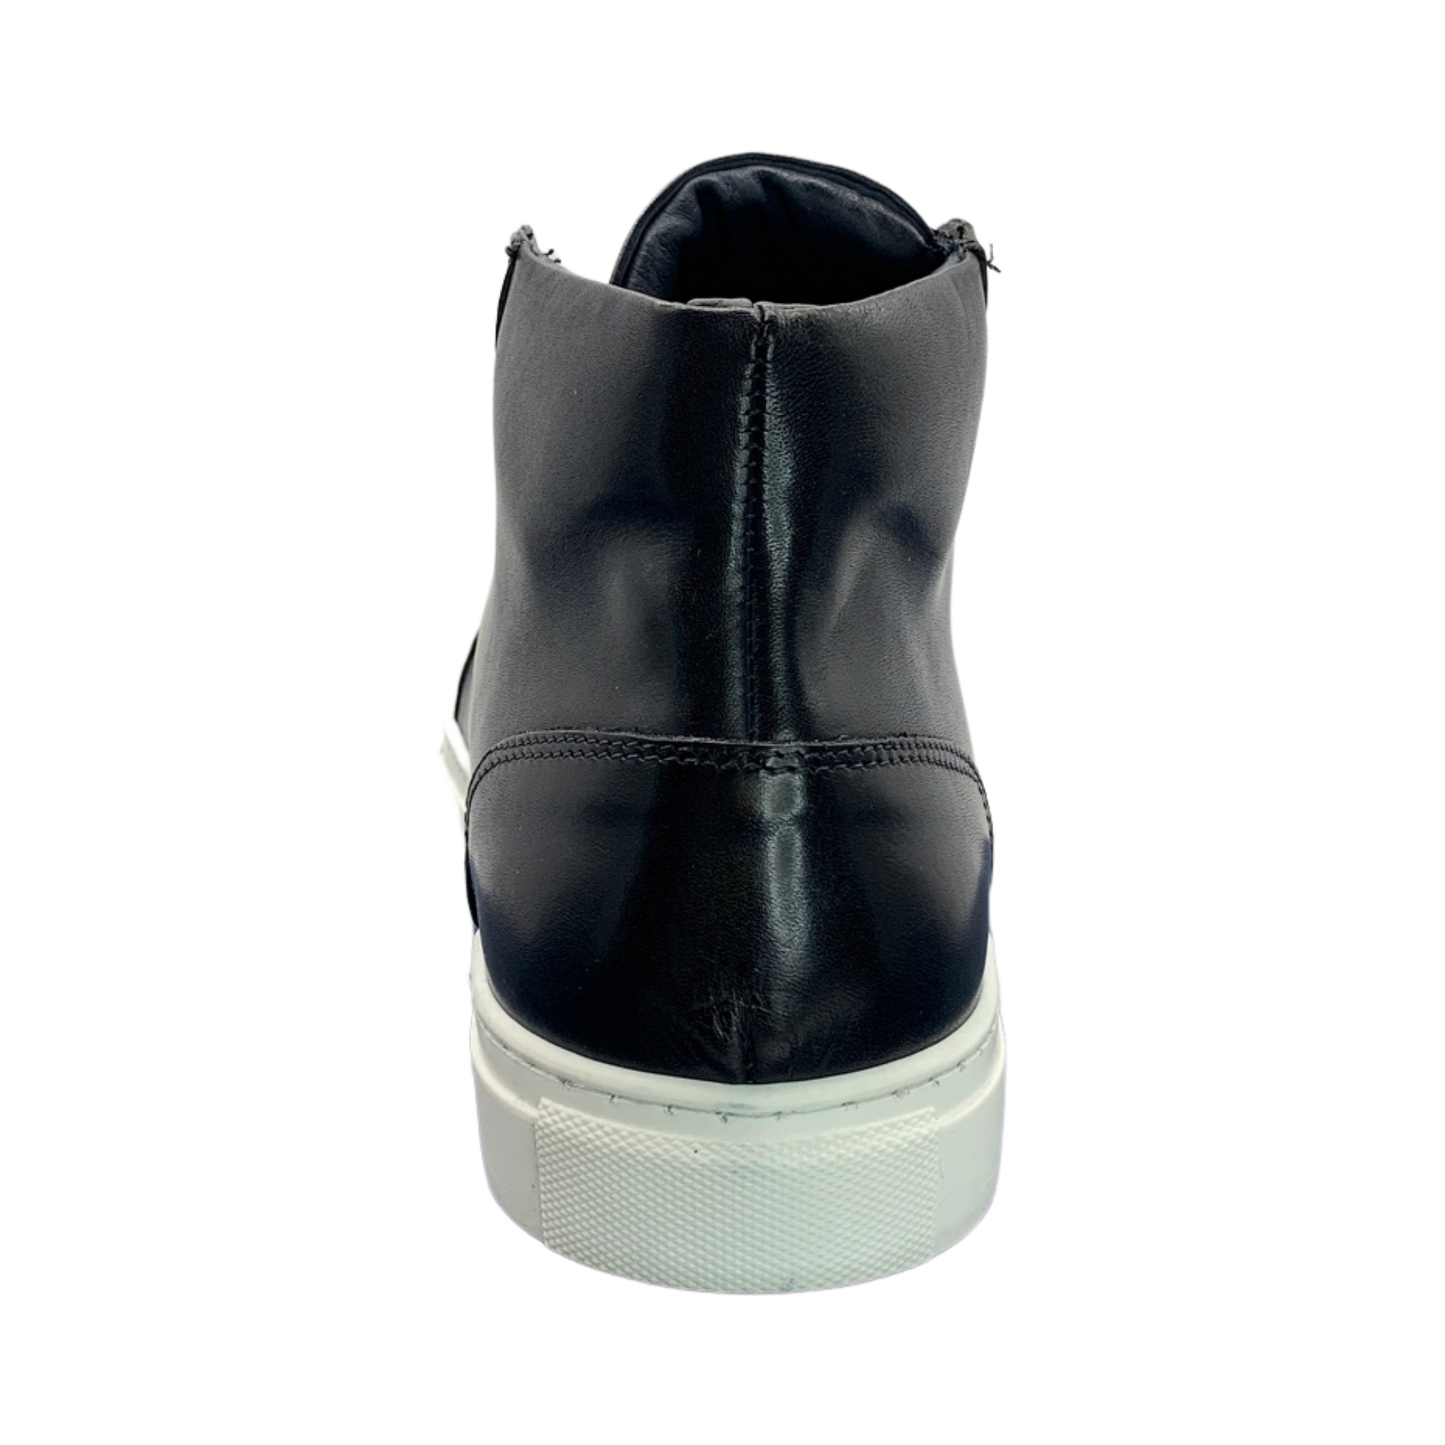 Alberto Black Leather High Top Dress Sneaker